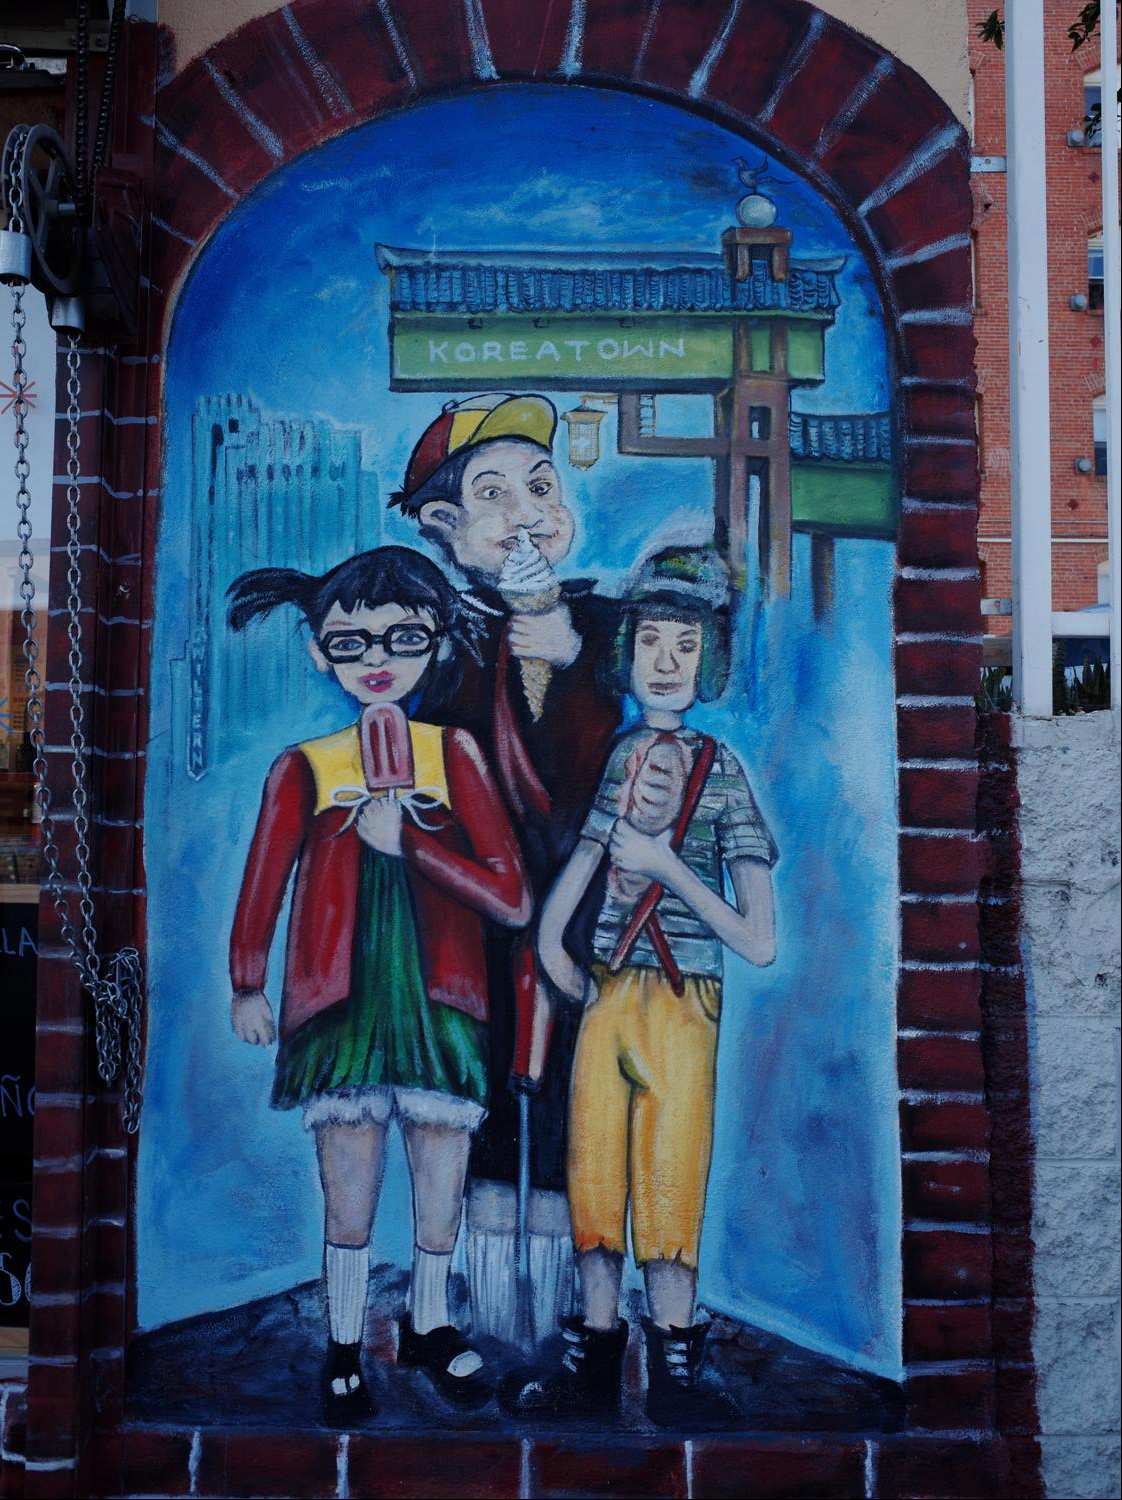 Mural of children eating ice cream in ktown